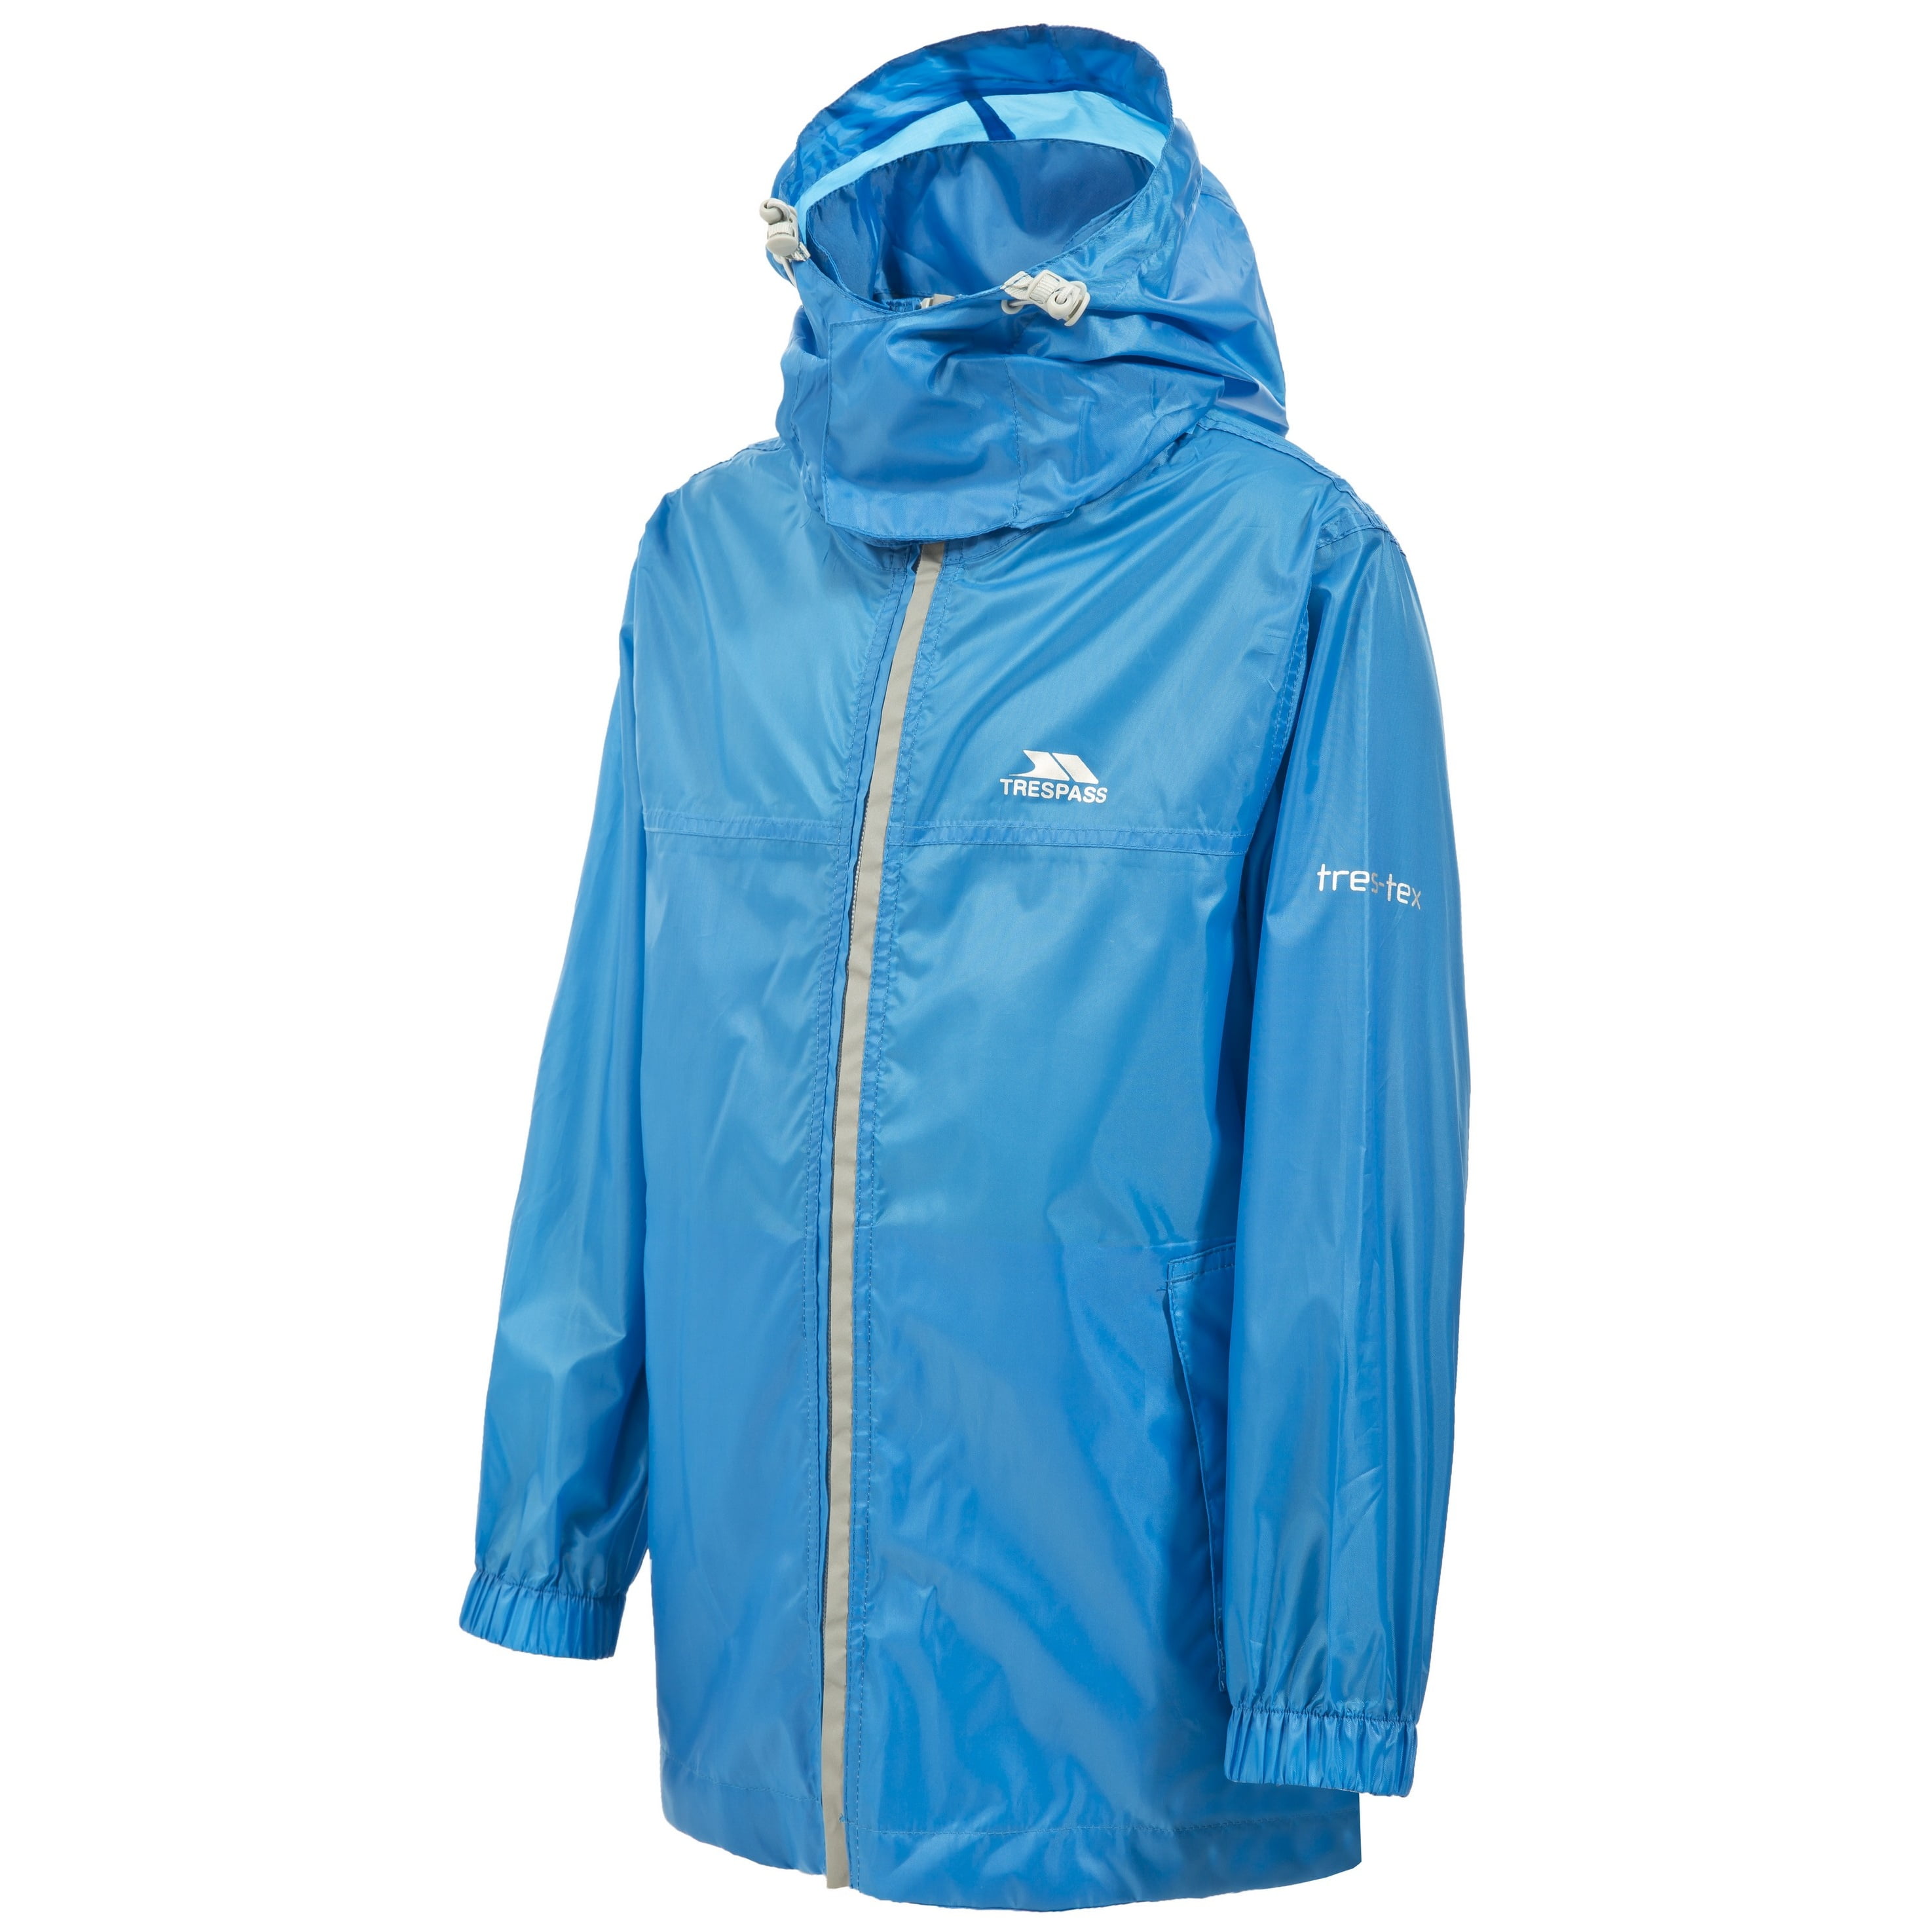 Trespass Galleys Boys Jacket Waterproof Breathable Coat